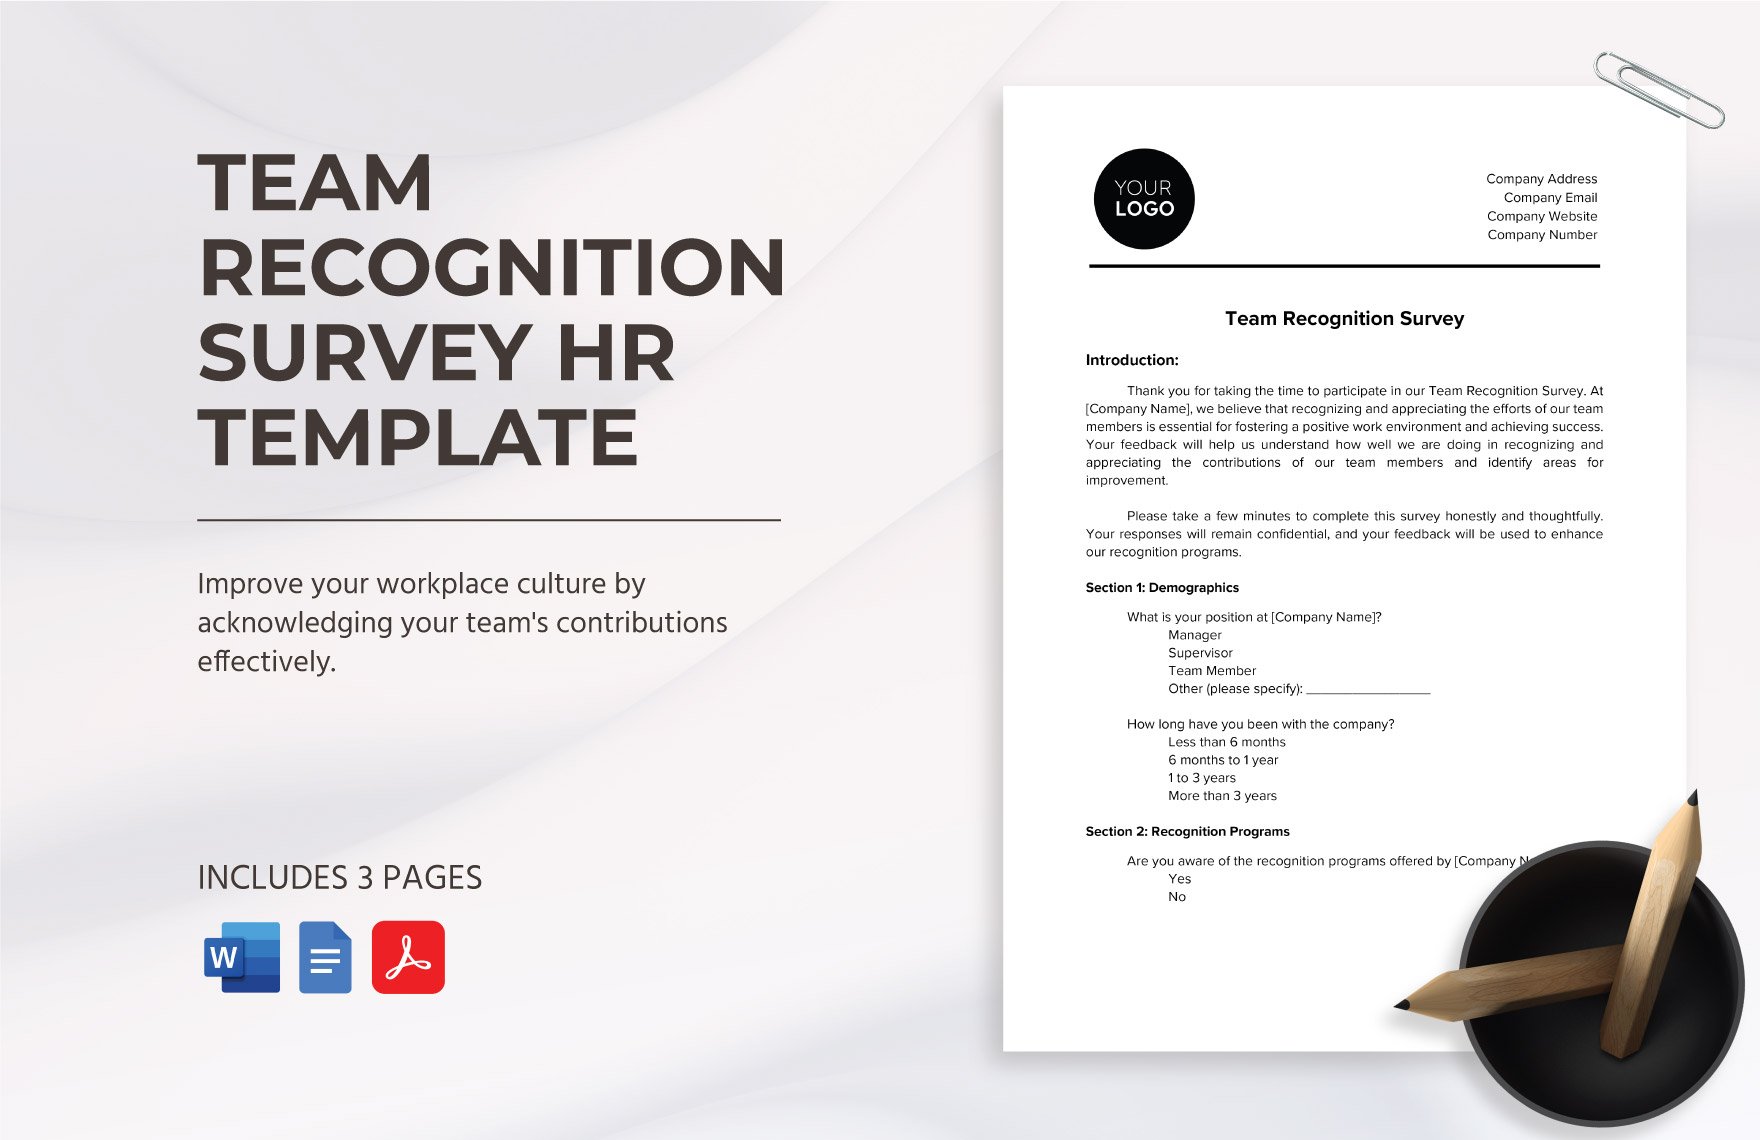 Team Recognition Survey HR Template in Word, Google Docs, PDF